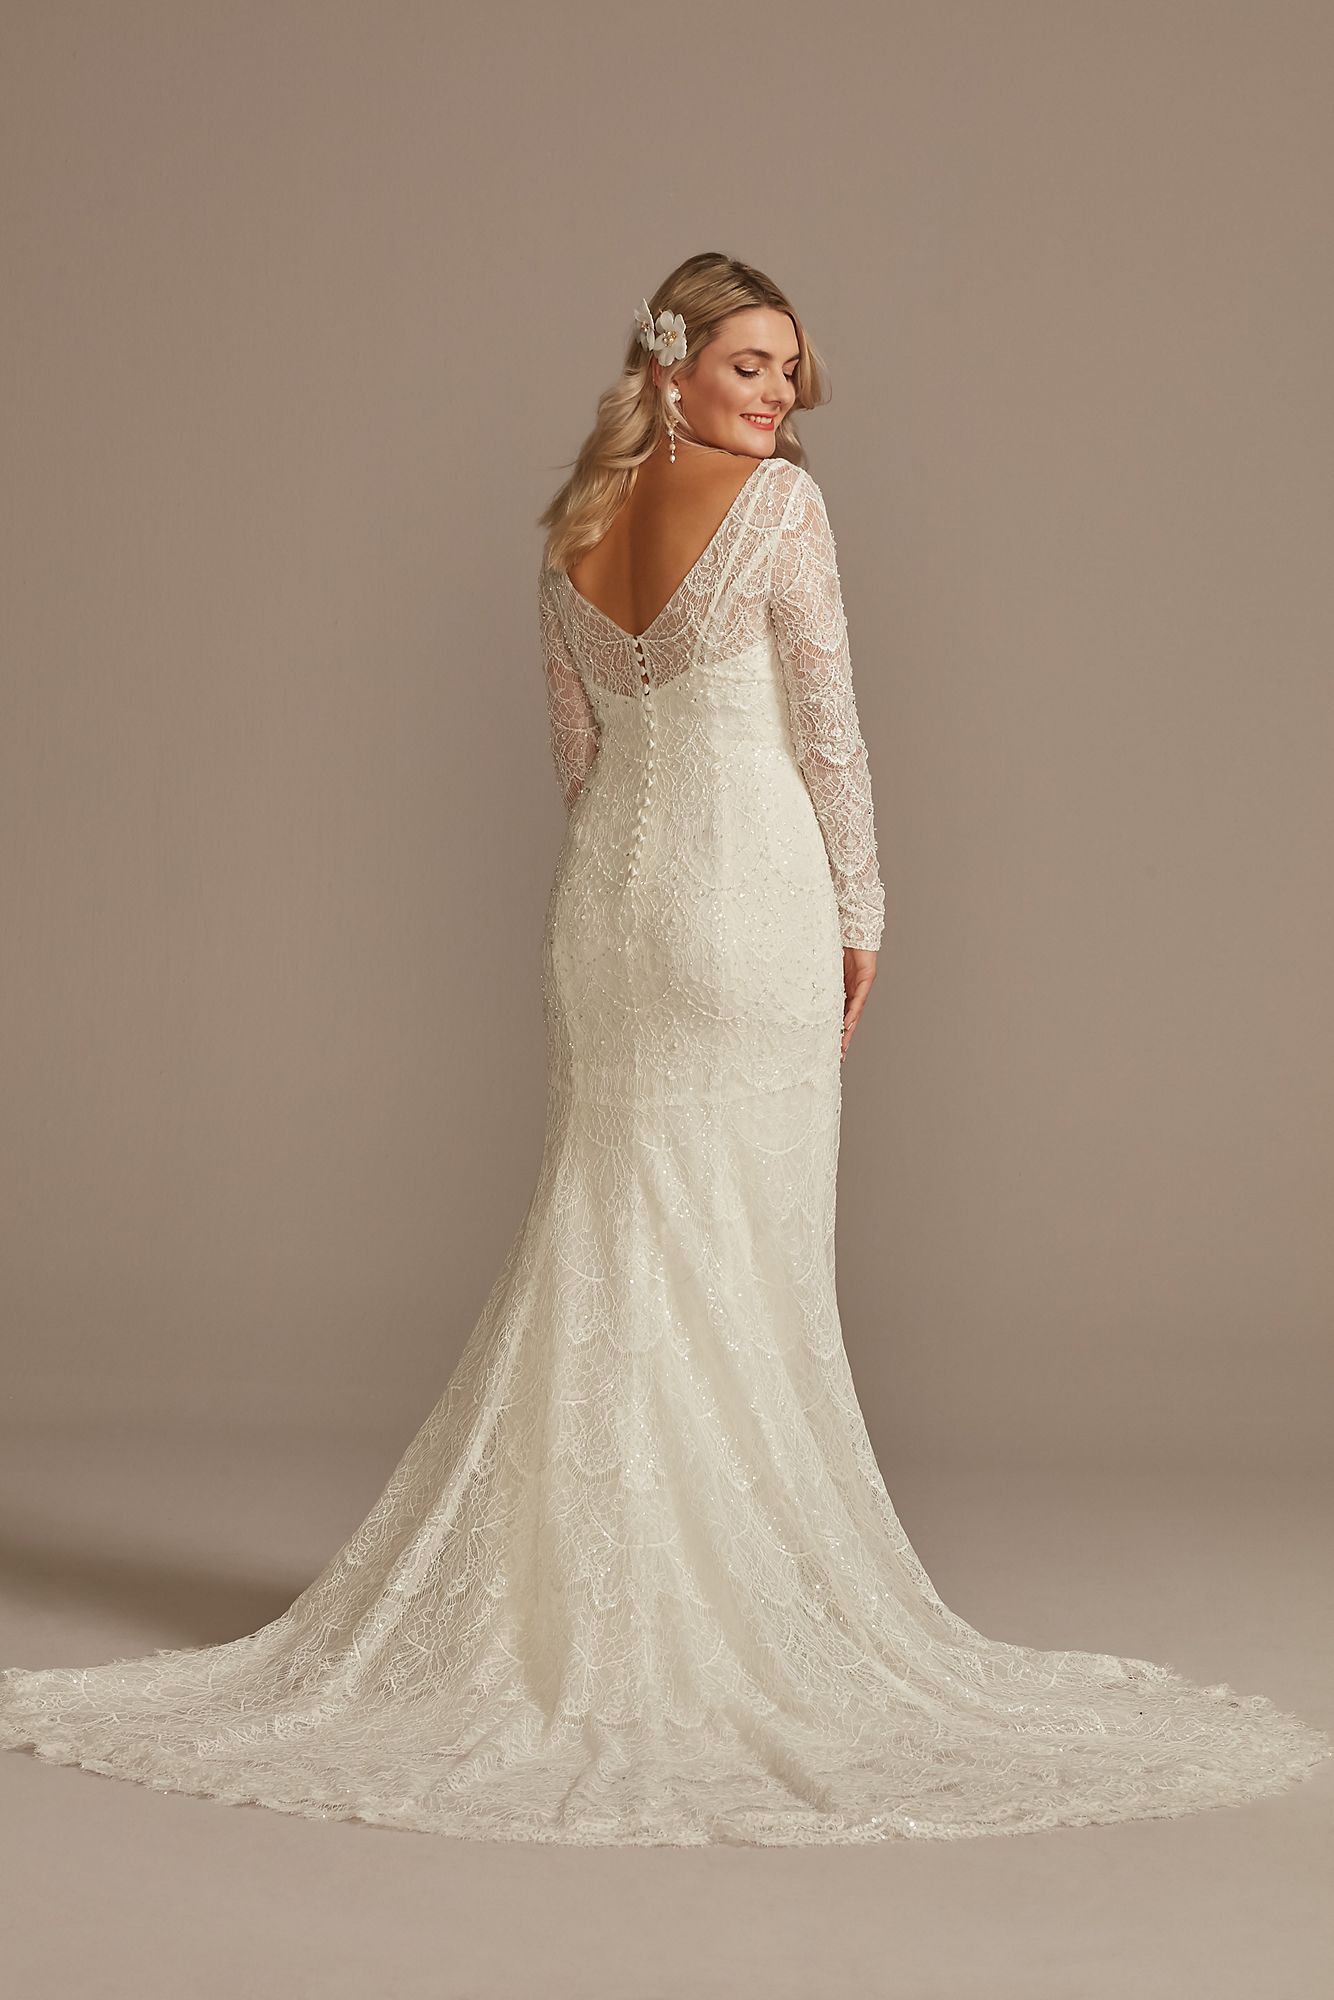 Hand Beaded Lace Long Sleeve Wedding Dress Melissa Sweet SLMS251206